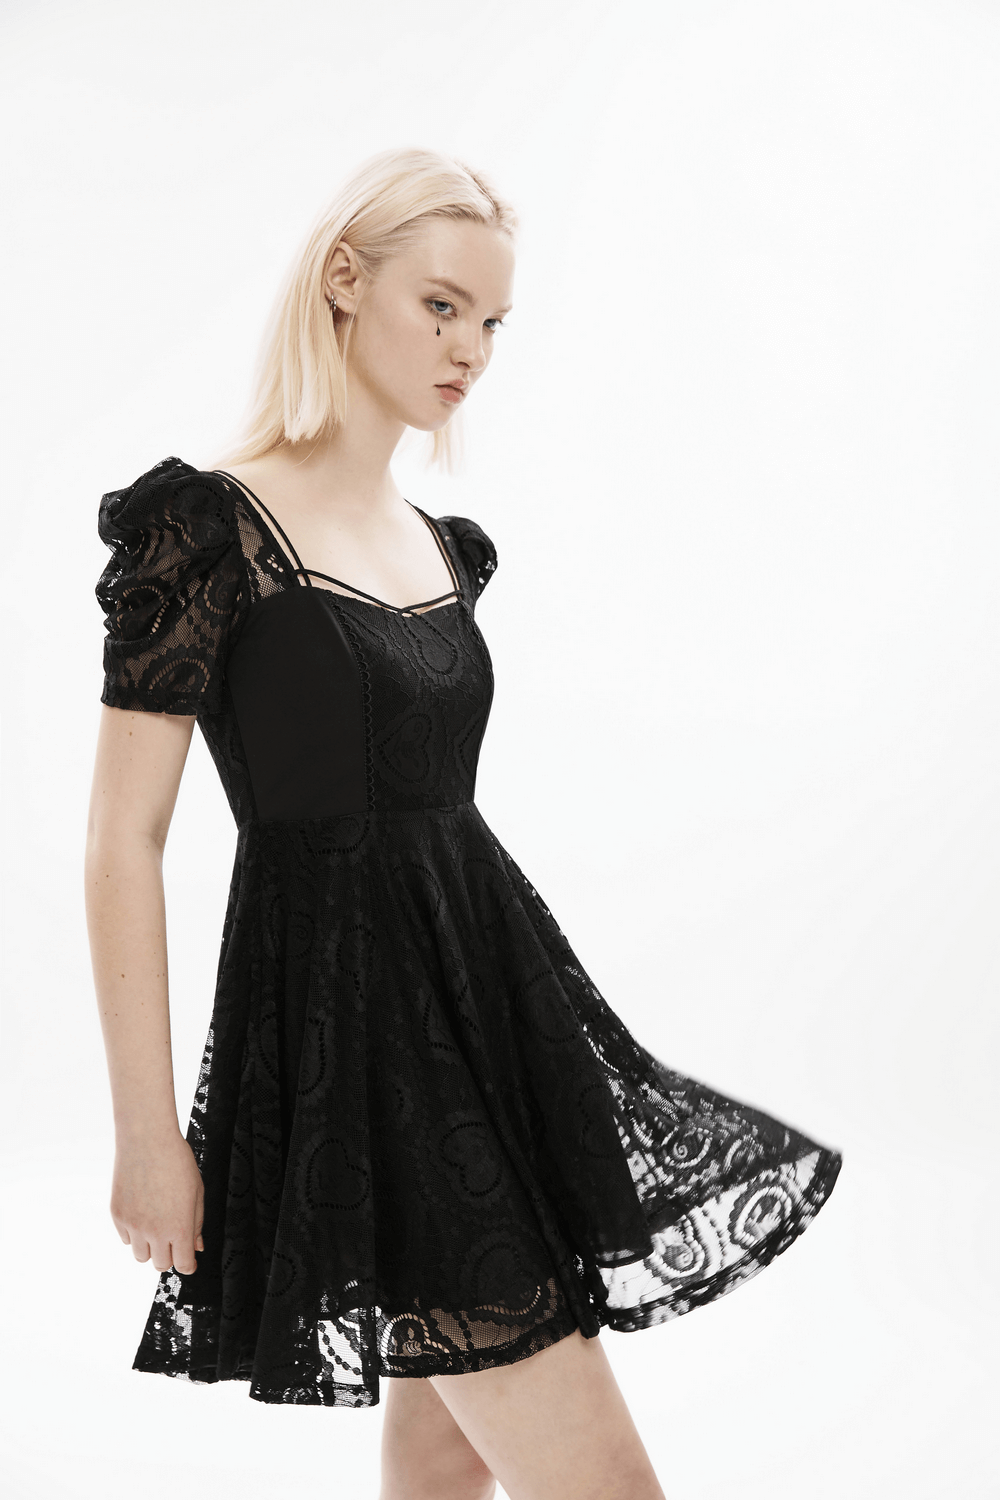 Black Gothic Princess Lace Mini Dress Puff Sleeves